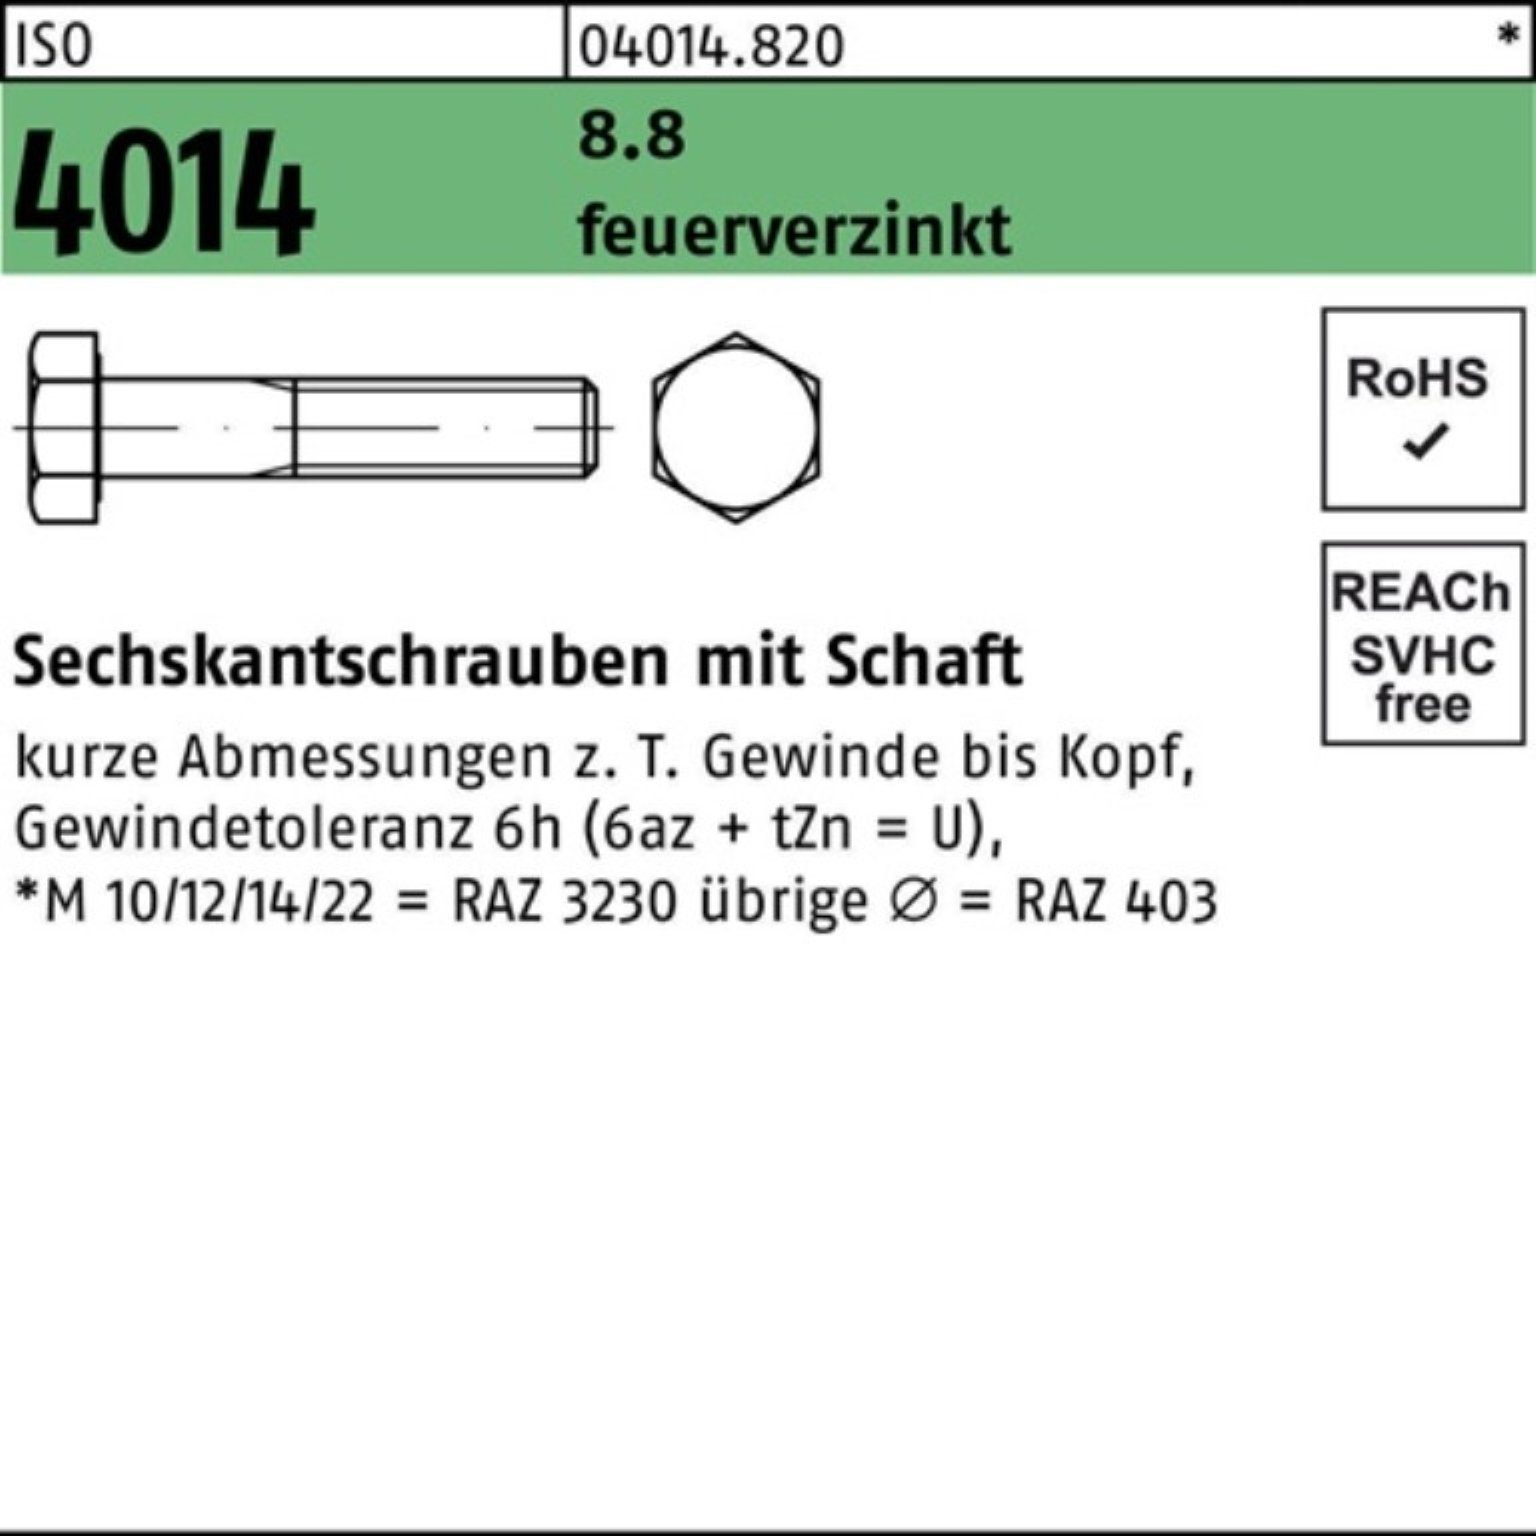 Bufab Sechskantschraube 100er Pack Sechskantschraube ISO 4014 Schaft M33x 200 8.8 feuerverz. 1 | Schrauben